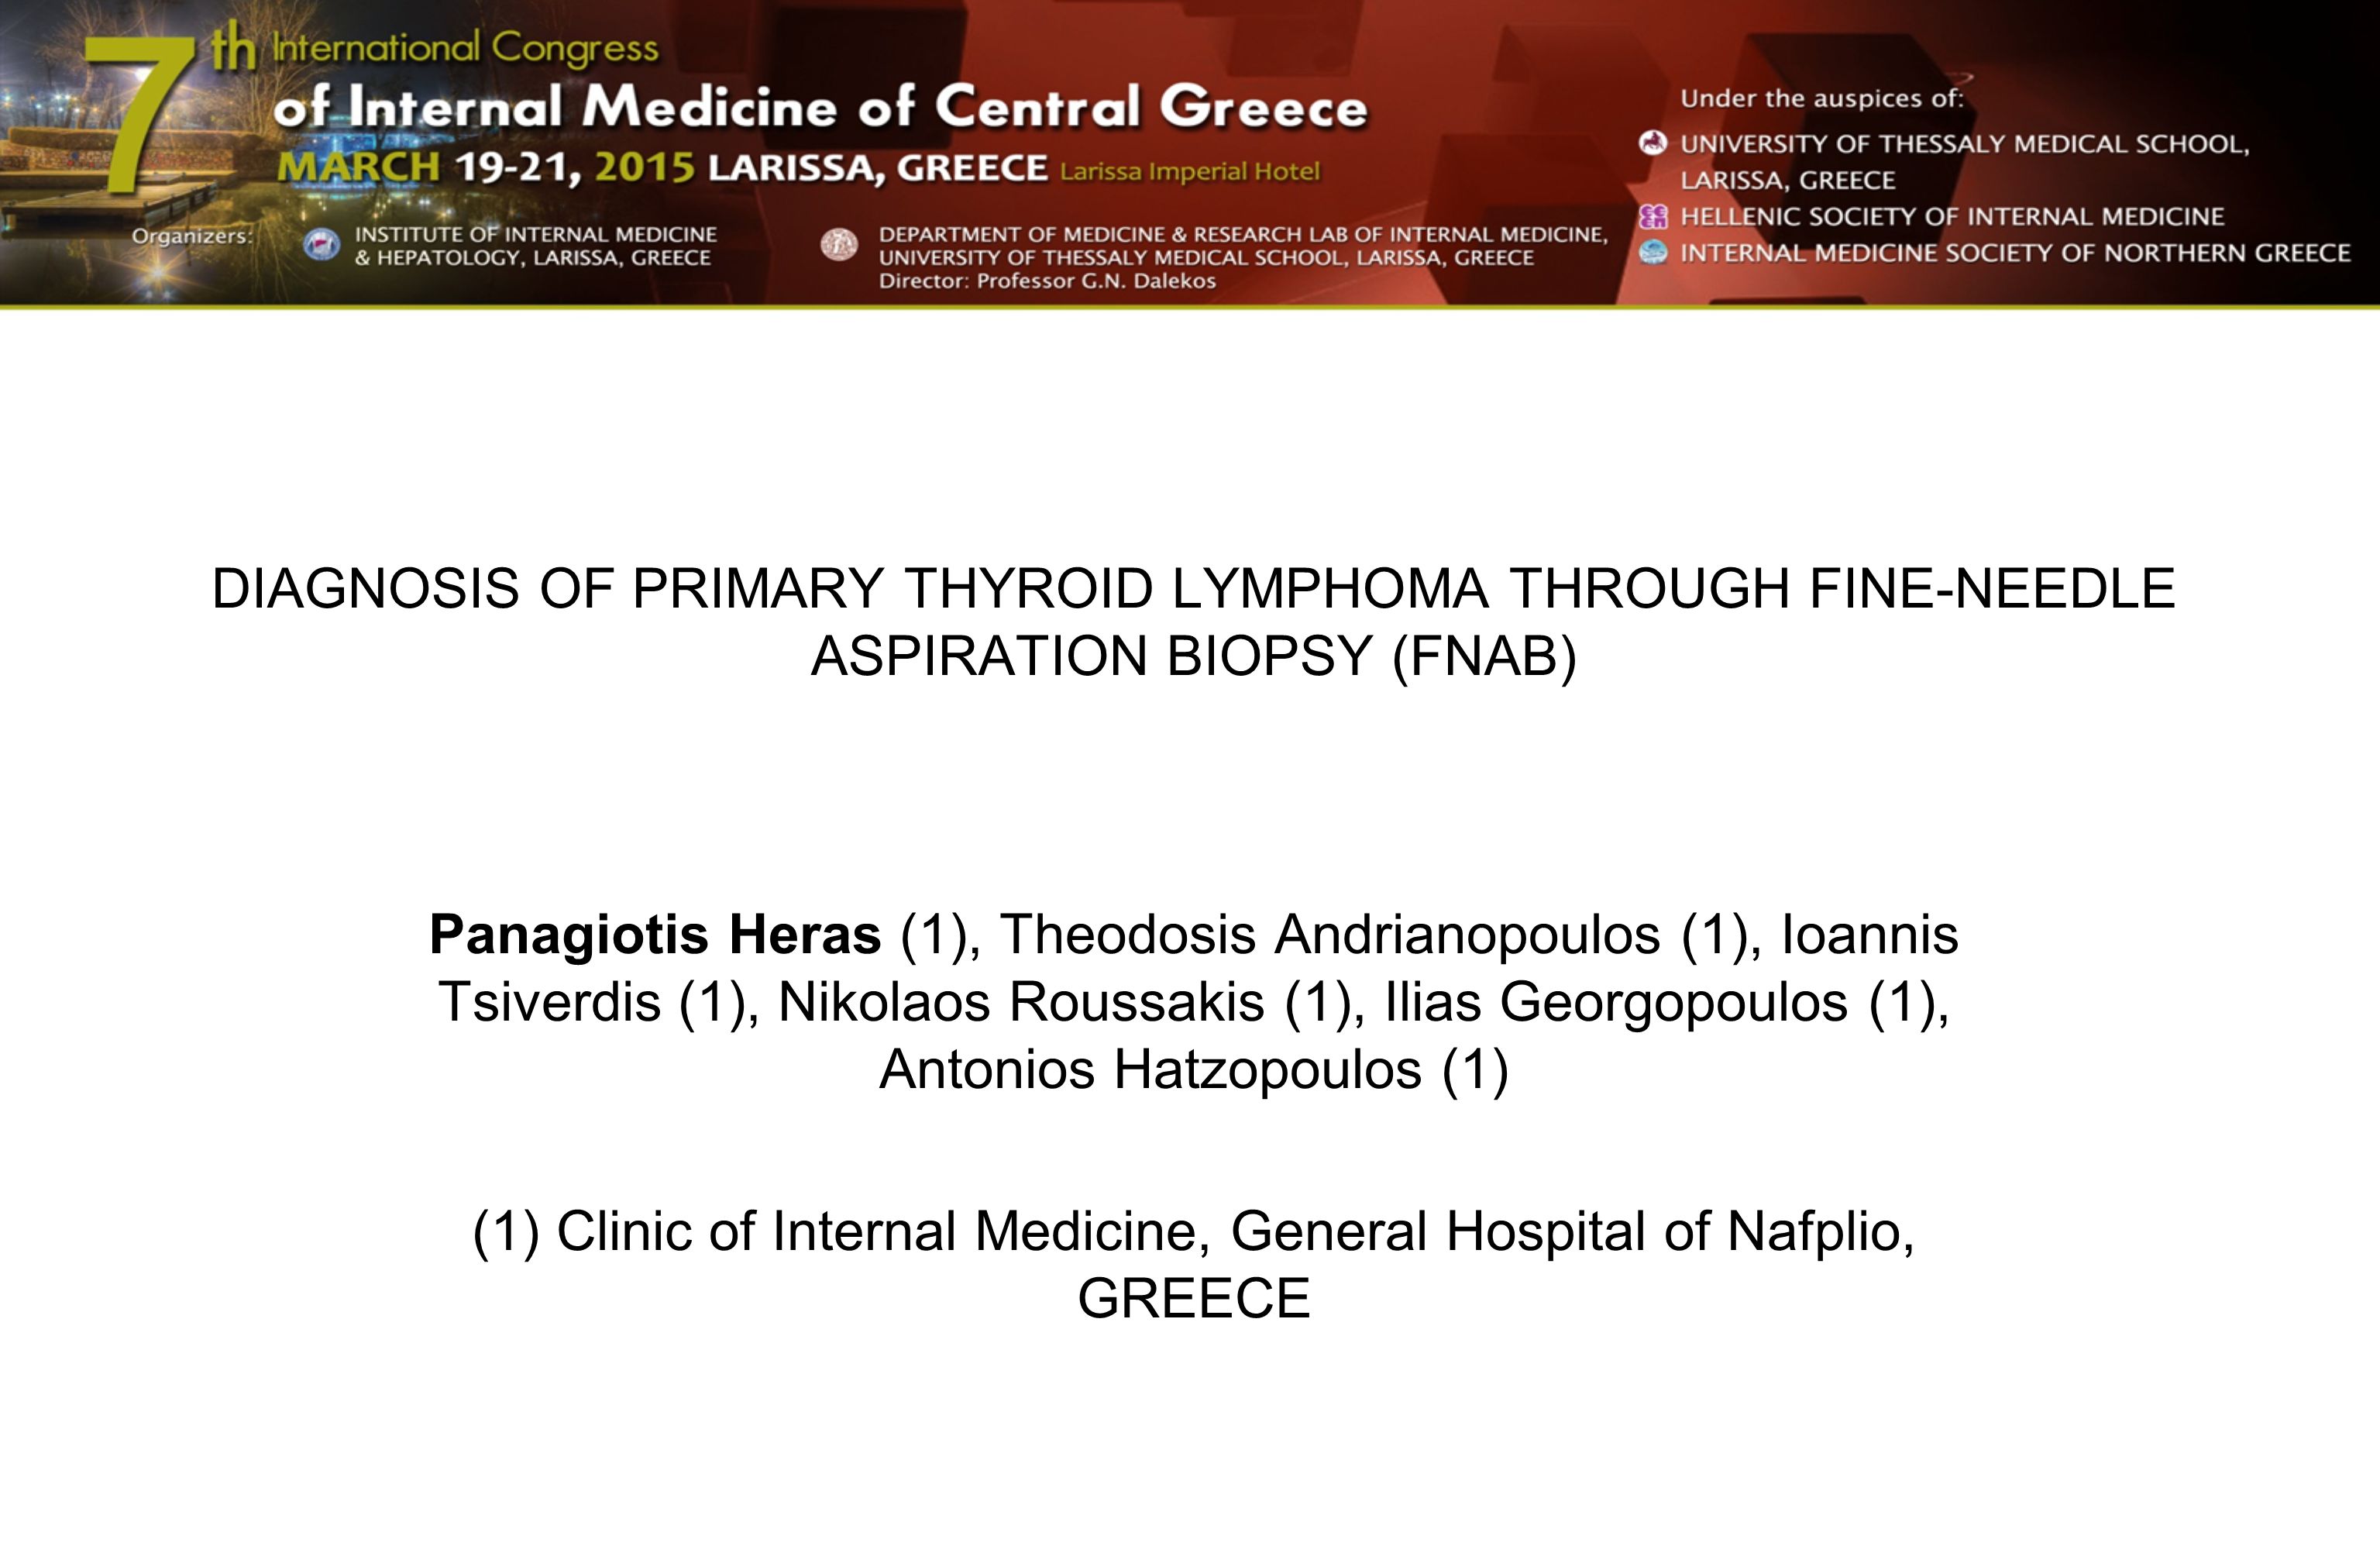 DIAGNOSIS OF PRIMARY THYROID LYMPHOMA THROUGH FINE-NEEDLE ASPIRATION BIOPSY  (FNAB) Panagiotis Heras (1), Theodosis Andrianopoulos (1), Ioannis  Tsiverdis. - ppt download